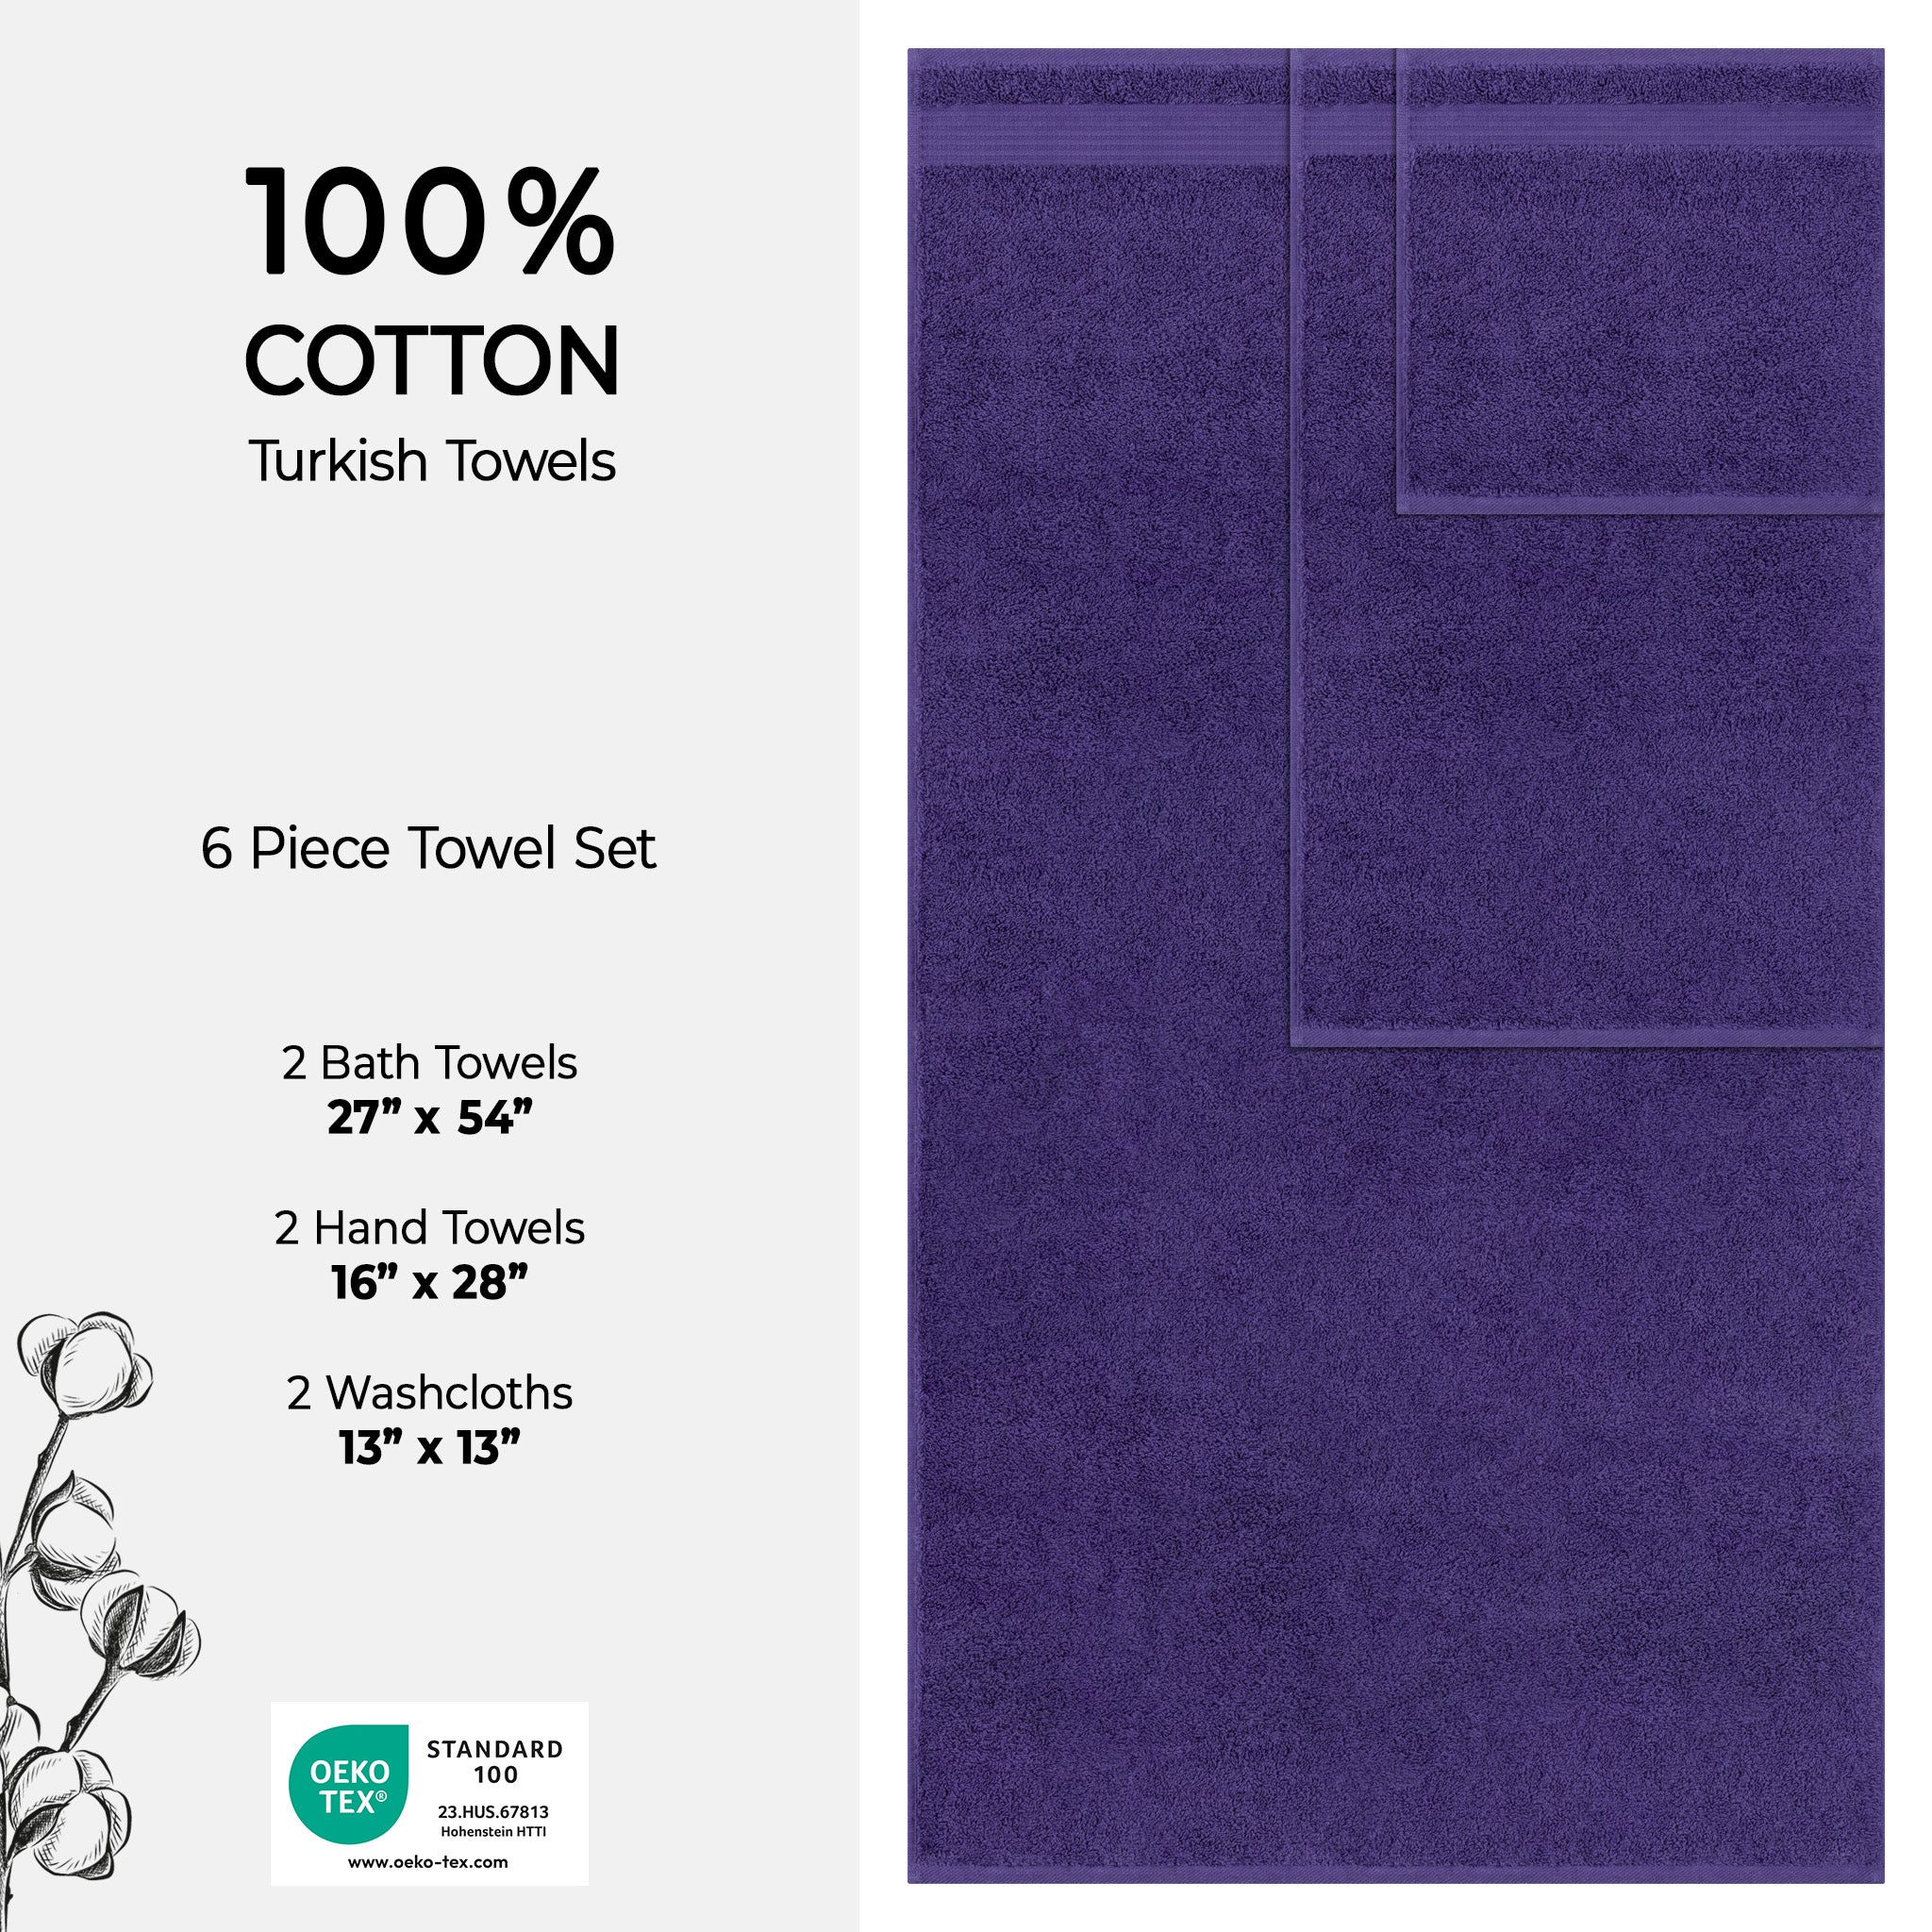 American Soft Linen Bekos 100% Cotton Turkish Towels 6 Piece Bath Towel Set -purple-04